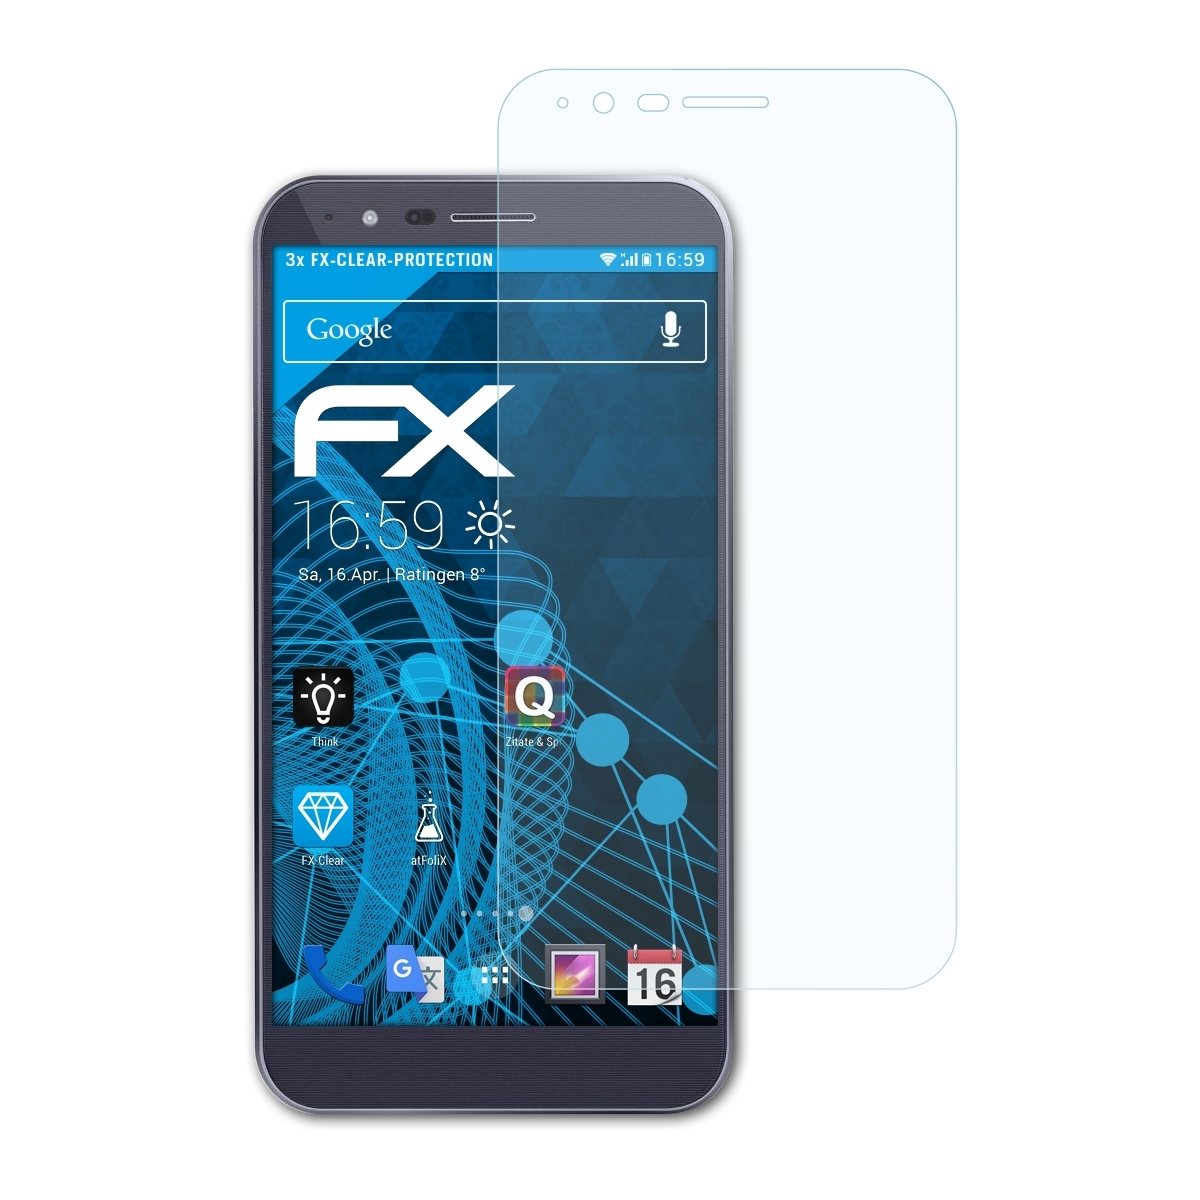 ATFOLIX 3x FX-Clear Displayschutz(für Stylo (TP450)) LG Plus 3